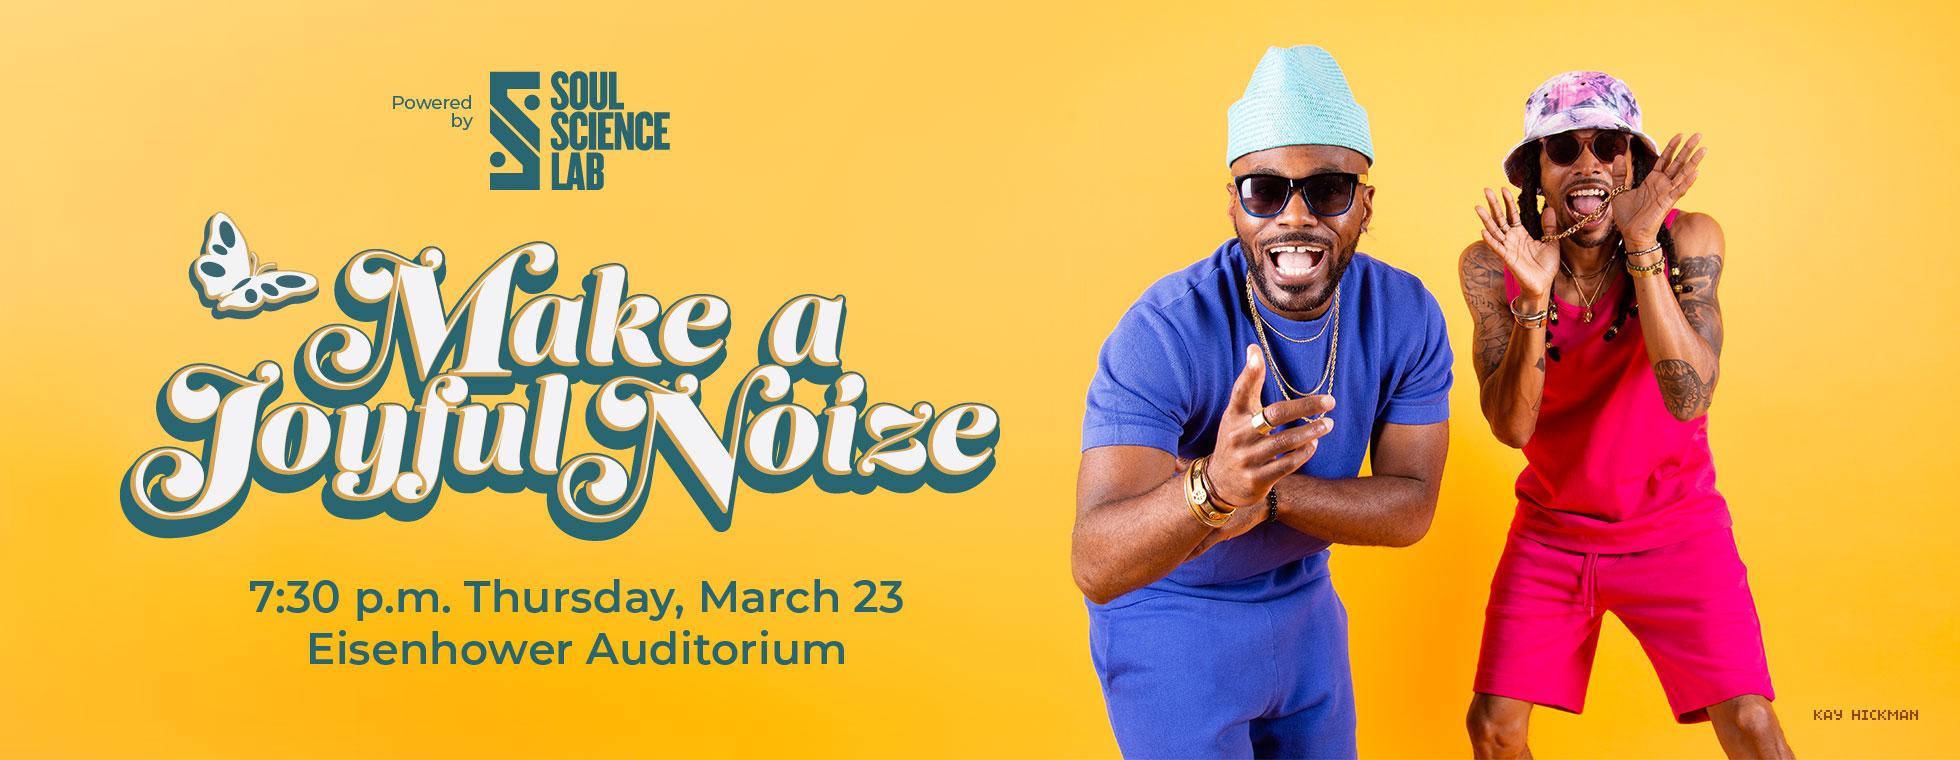 Make A Joyful Noize. Powered by Soul Science Lab. 7:30 p.m. Thursday, March 23 in Eisenhower Auditorium